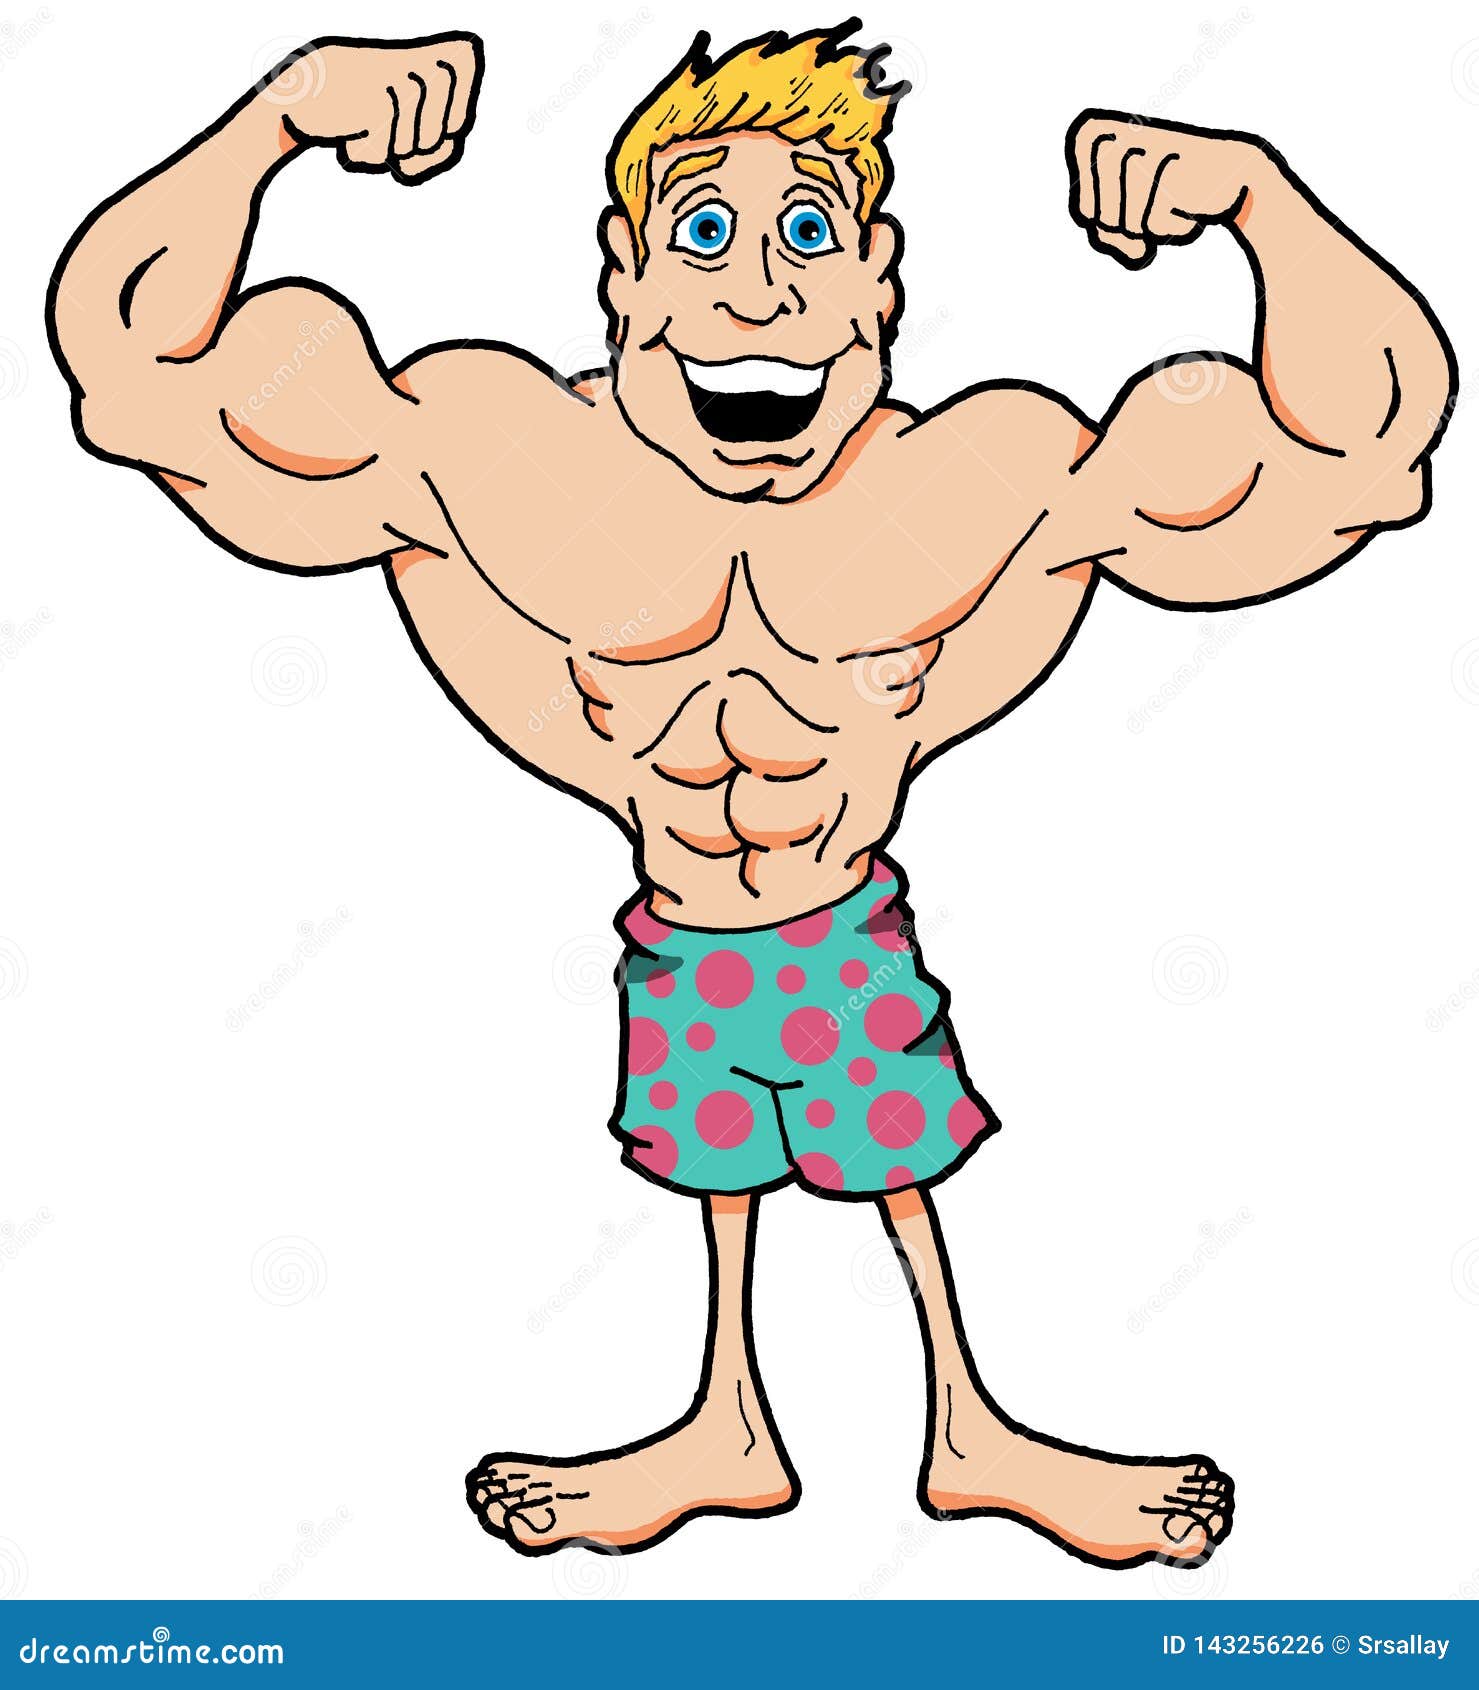 bodybuilder-skinny-legs-humorous-cartoon-illustration-muscular-143256226.jpg